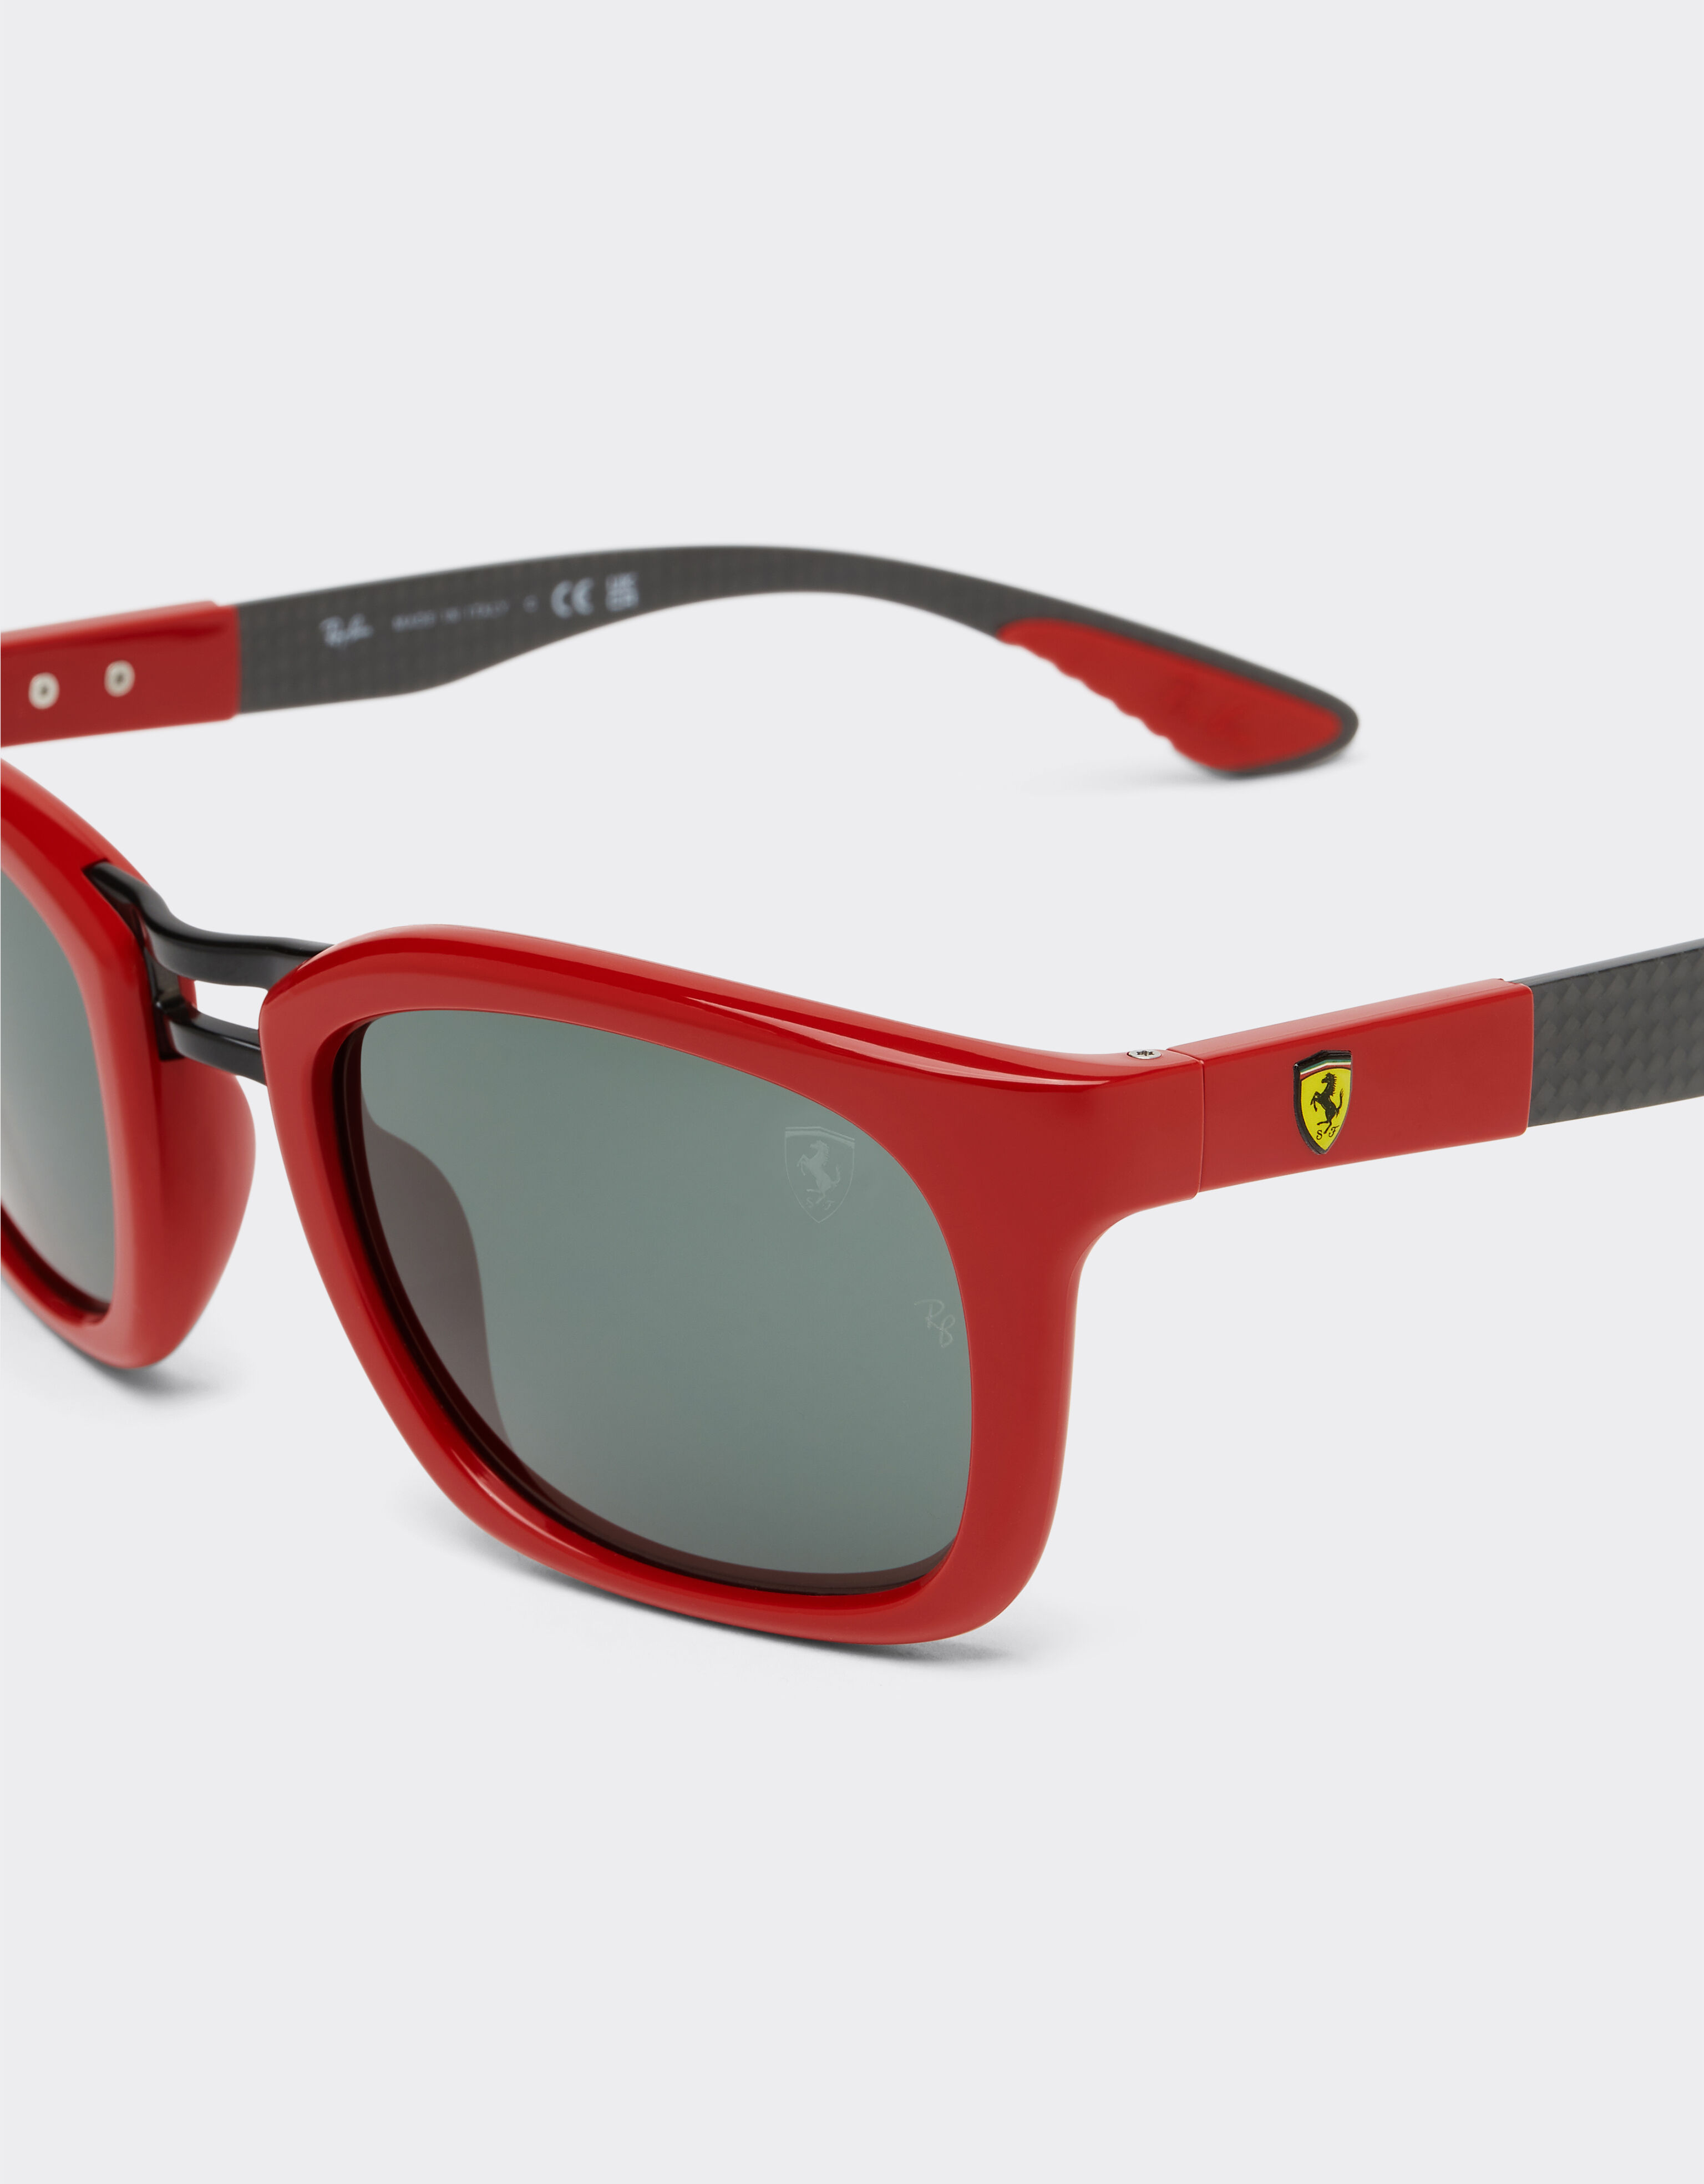 Ferrari Ray-Ban für Scuderia Ferrari RB8362MF in Rot/dunklem Carbon mit dunkelgrünen Gläsern Rot F1045f